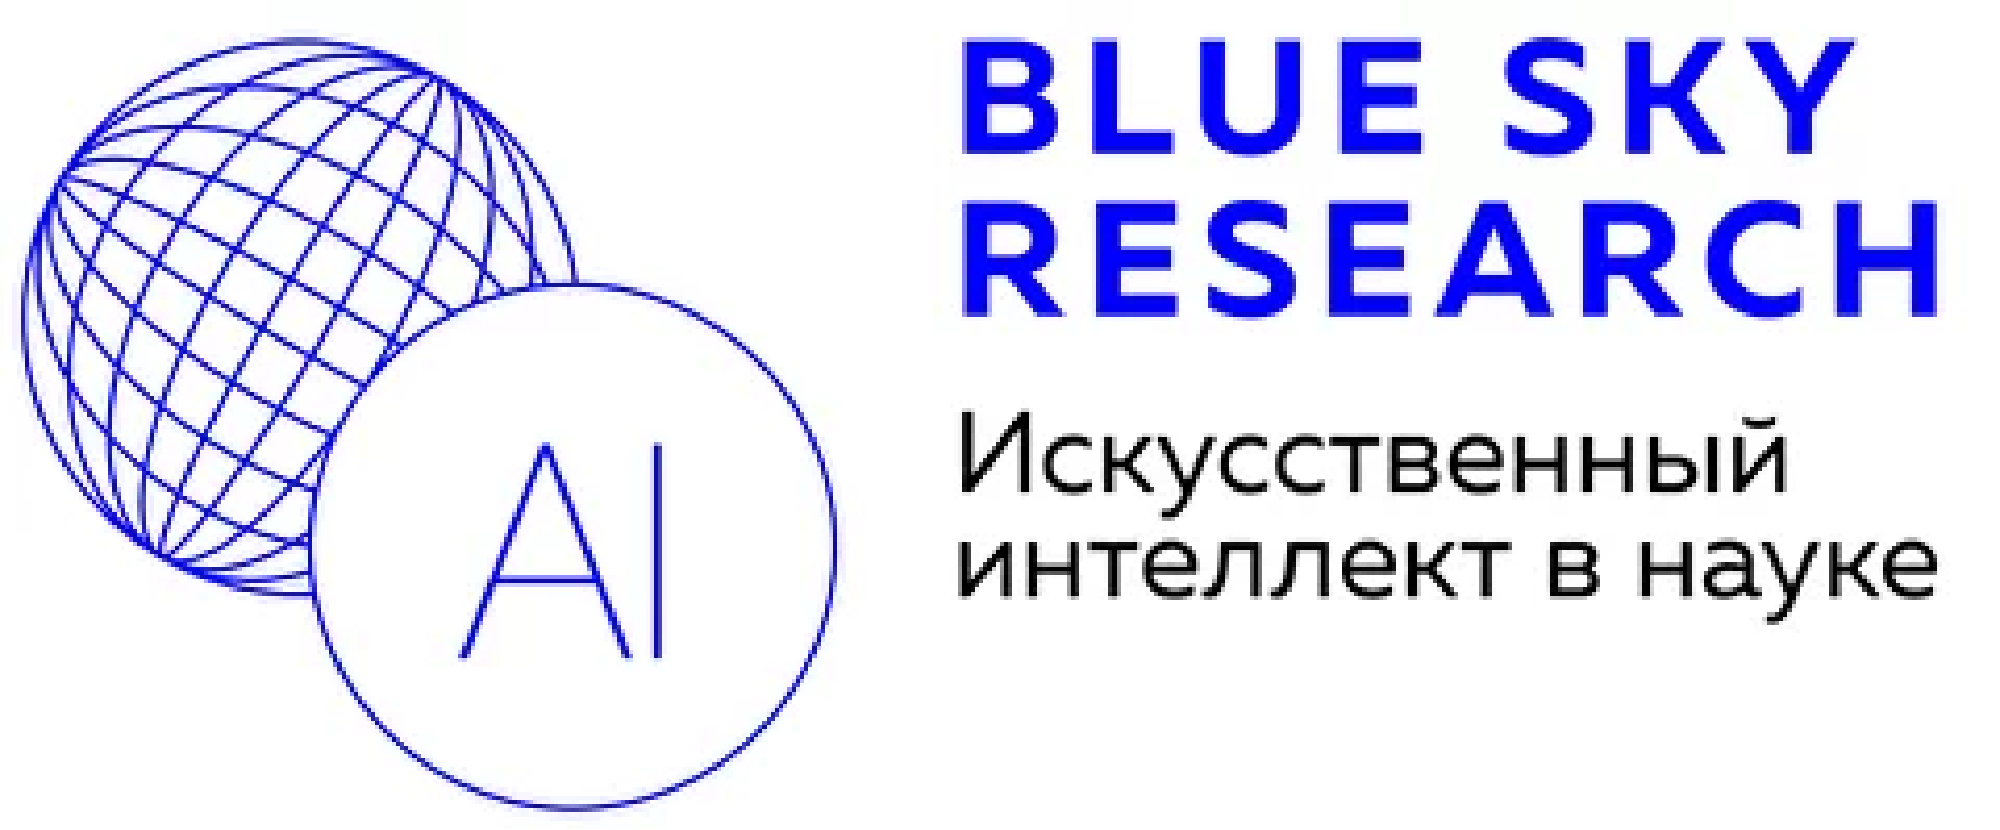 Blue Sky Research